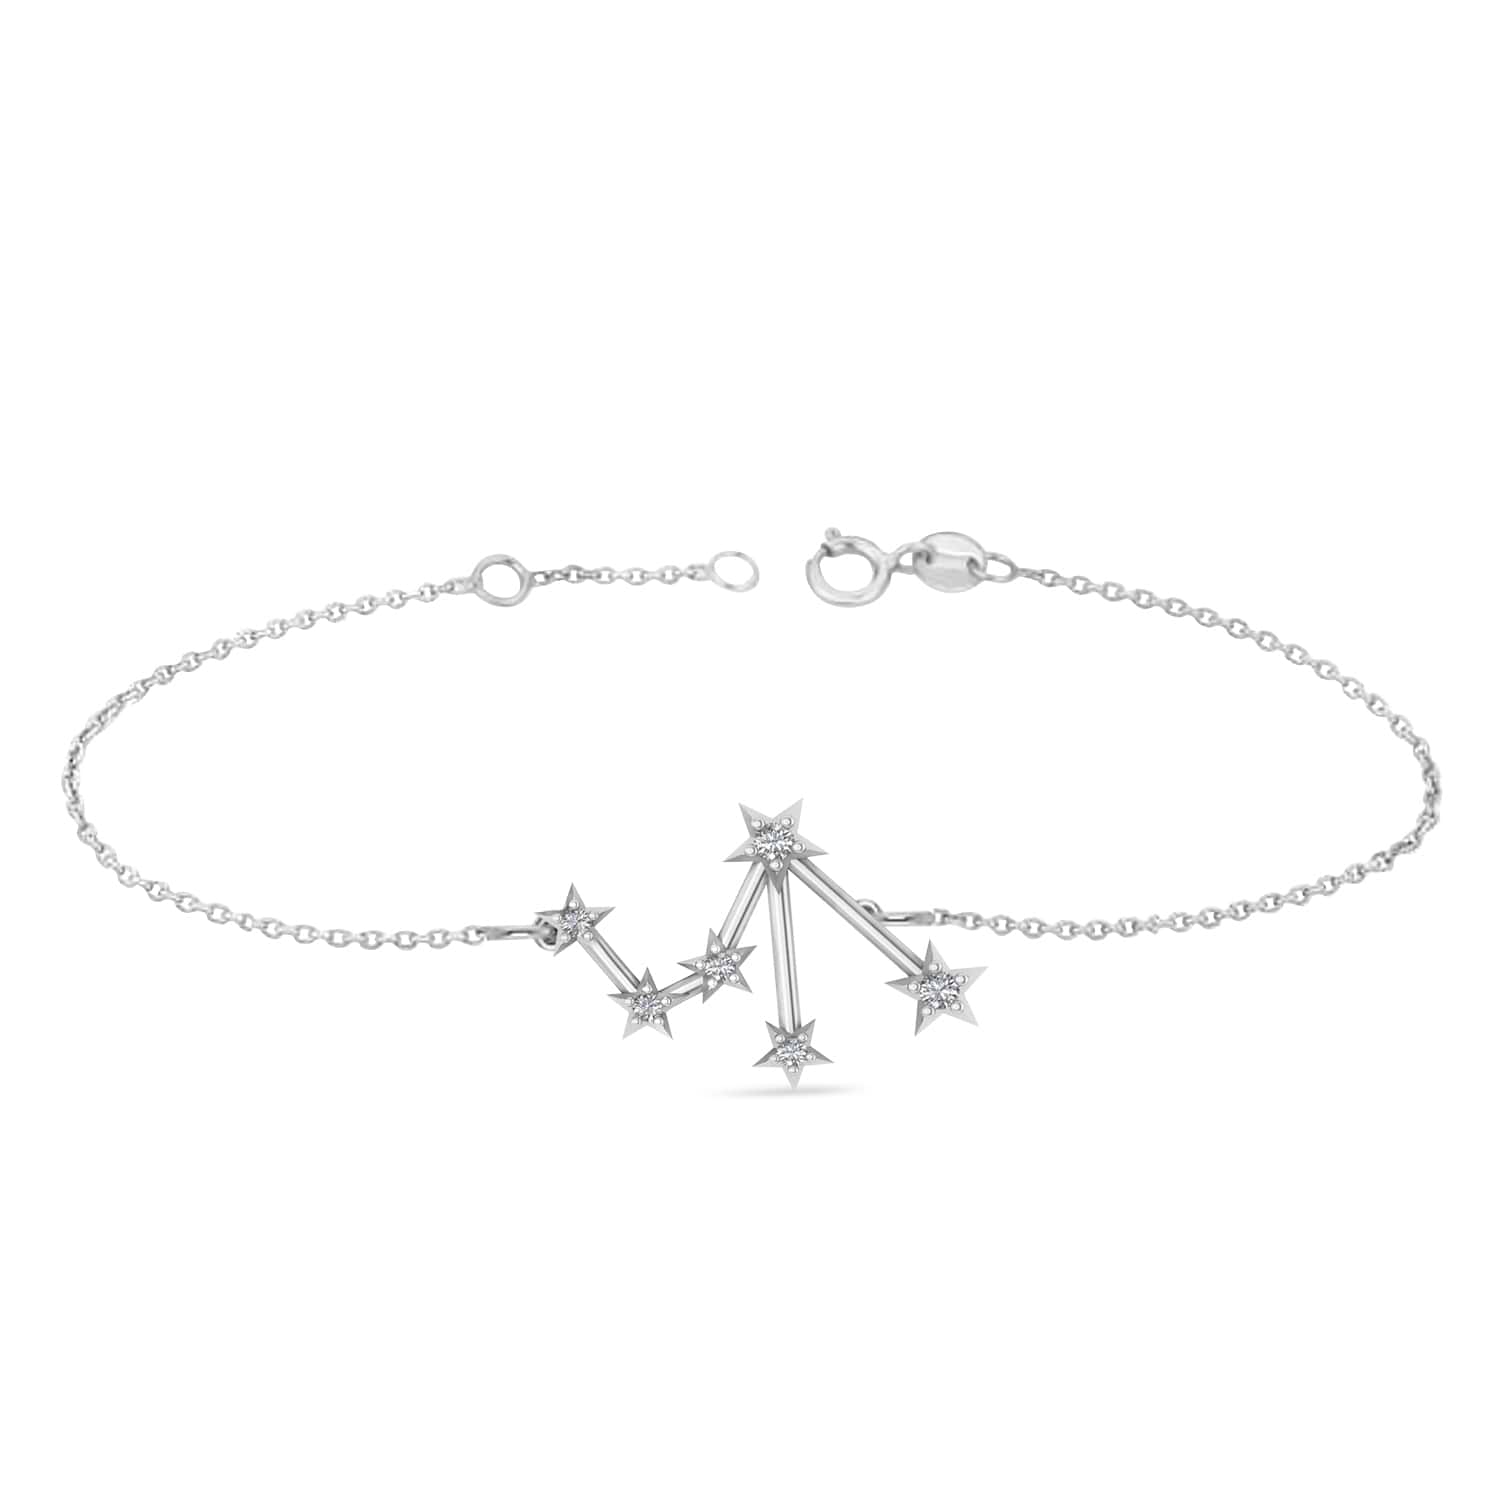 Diamond Libra Zodiac Constellation Star Bracelet 14k White Gold (0.08ct)